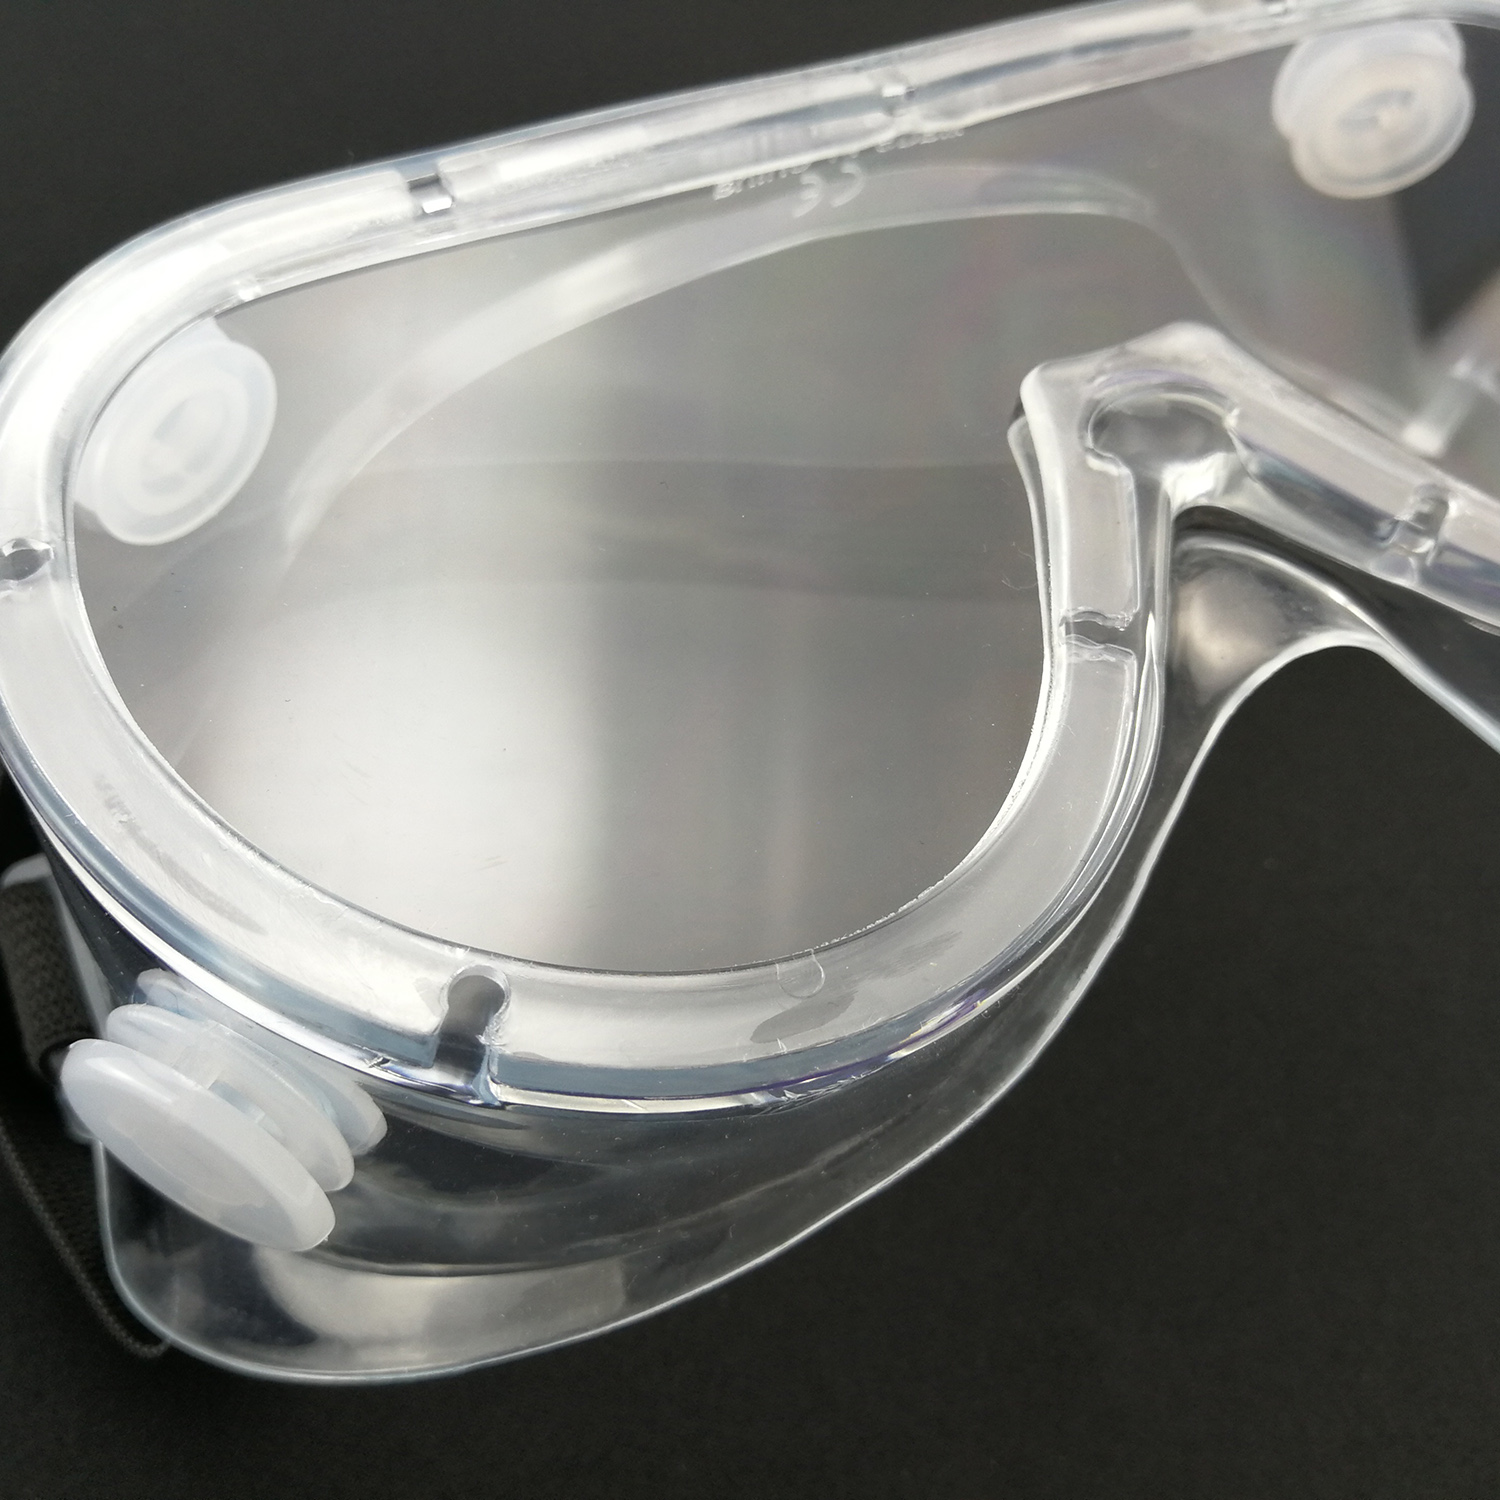 industrial eye protection goggles manufacturer, wholesaler